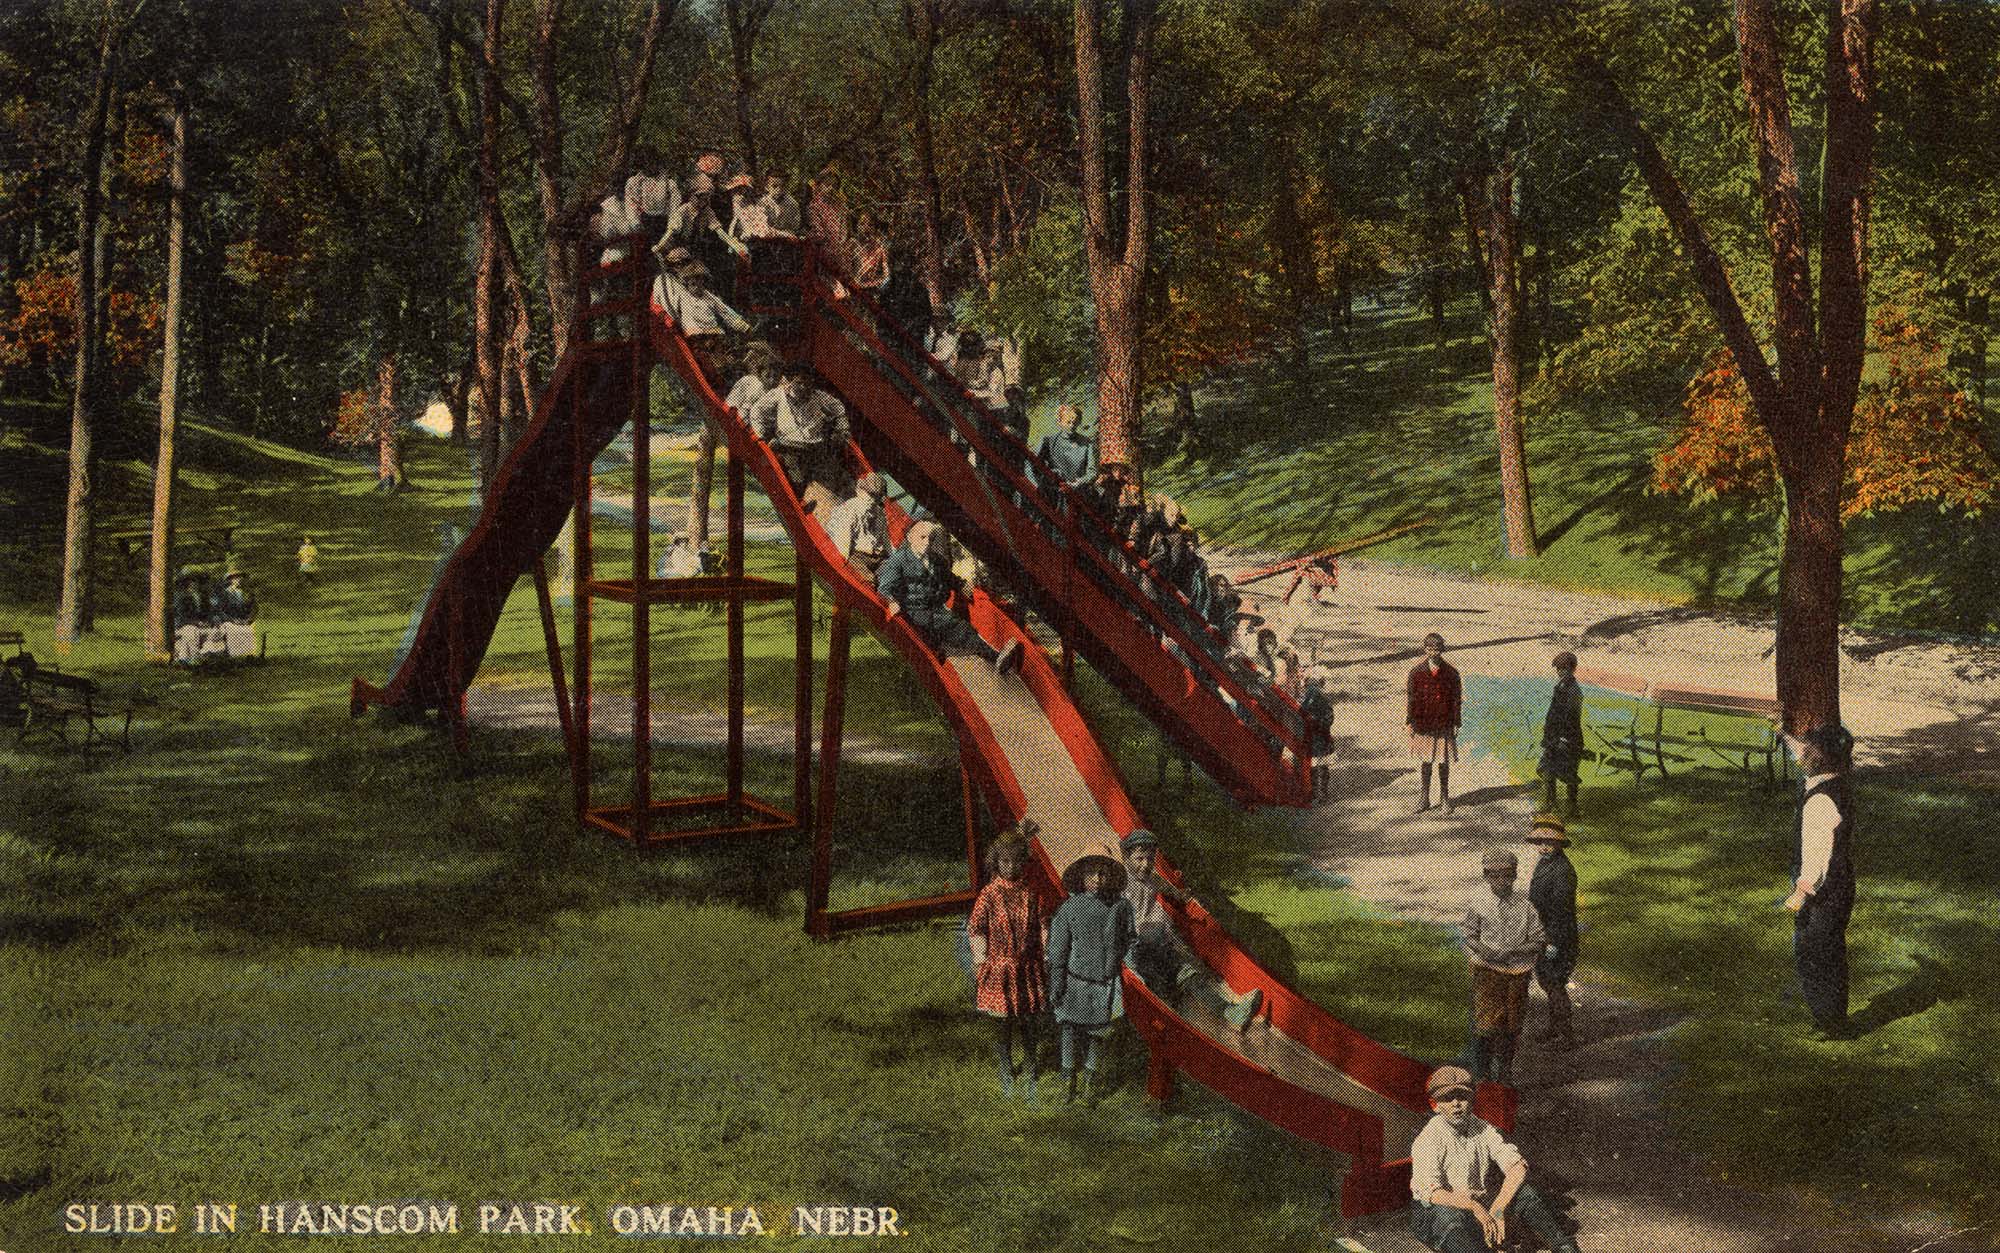 Slide in Hanscom Park, Omaha, Nebr.